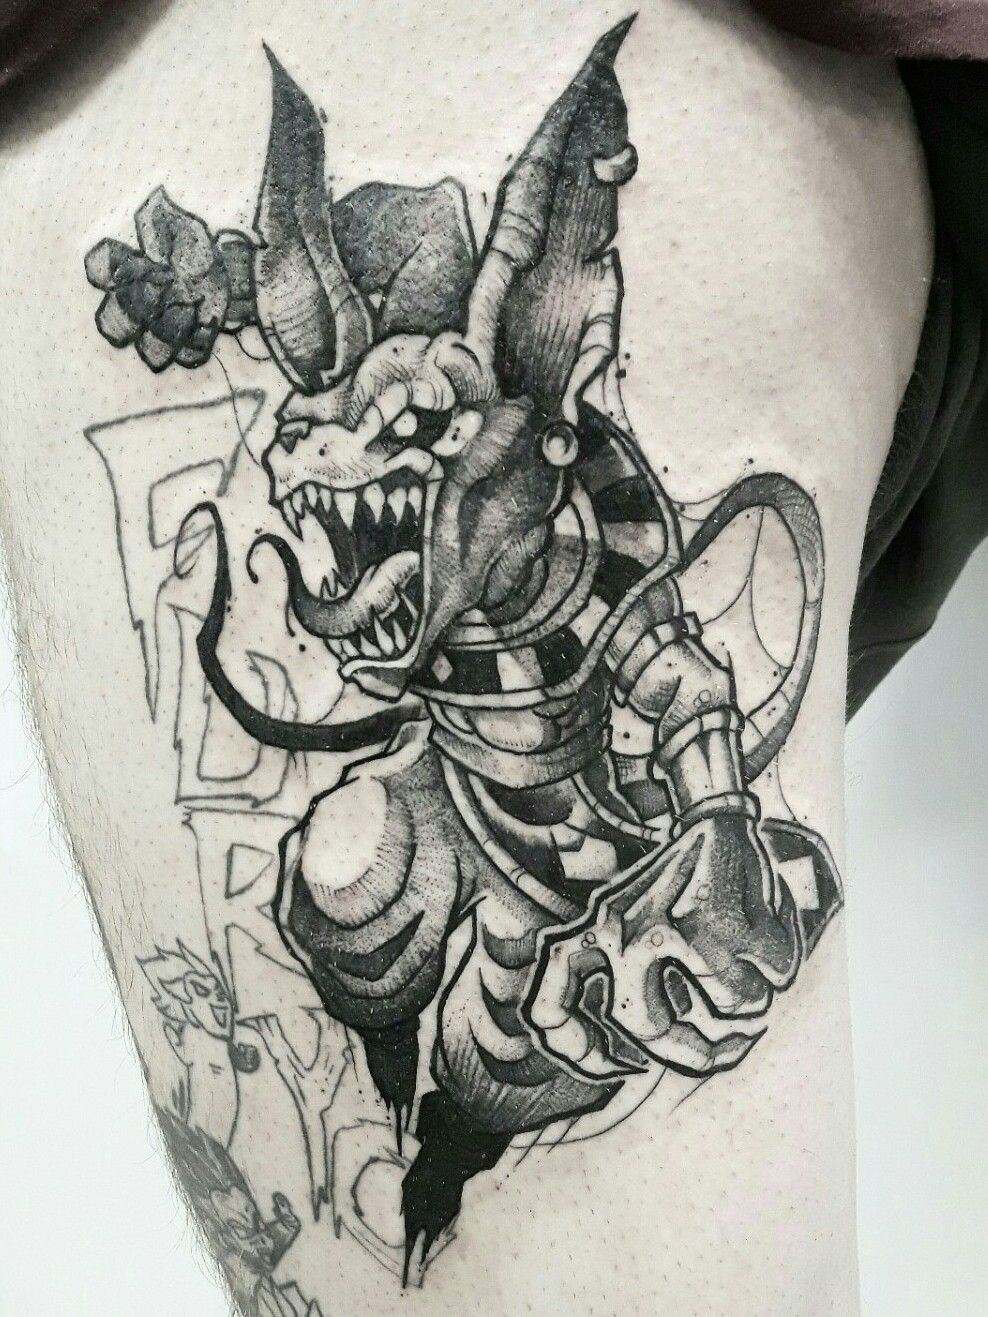 My Lord Beerus done by inkaholiktony from Inkaholik tattoo in Miami   Dragon ball tattoo Tattoos Dragon tattoo